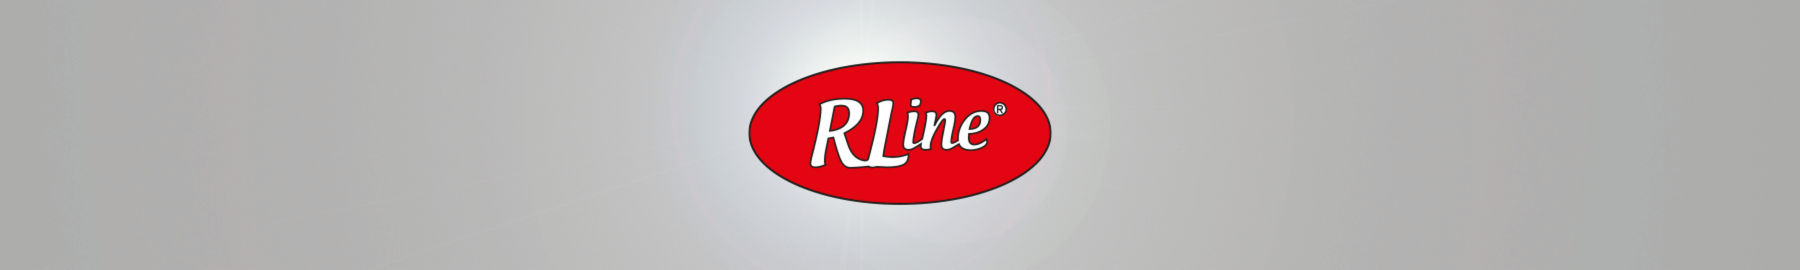 RLine